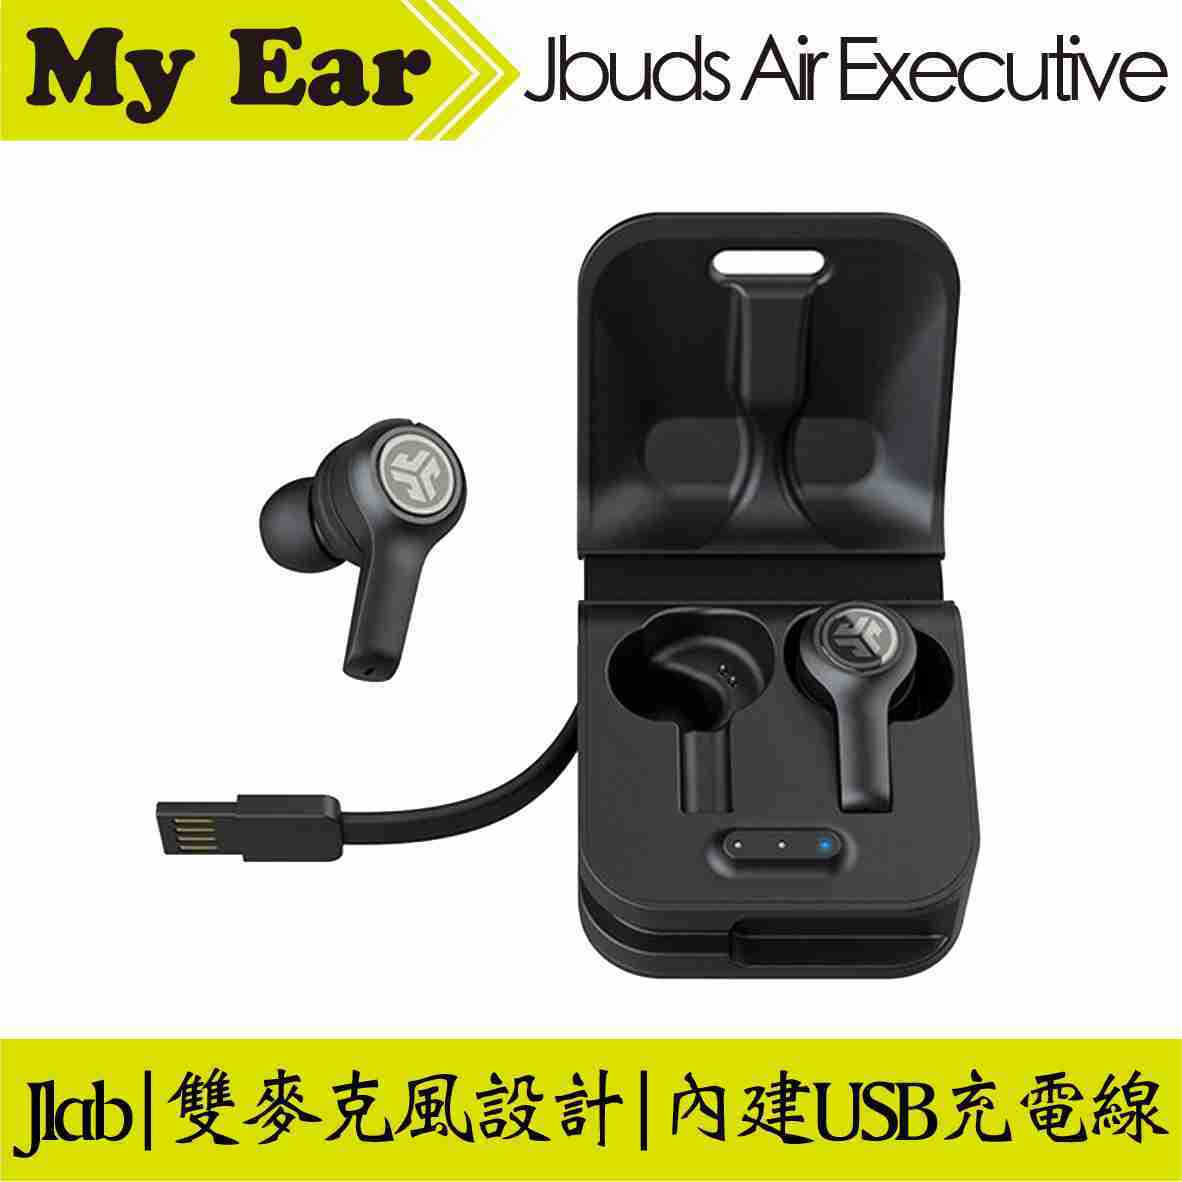 JLAB Jbuds Air Executive 黑色 真無線藍芽耳機 環境音 | My Ear 耳機專門店